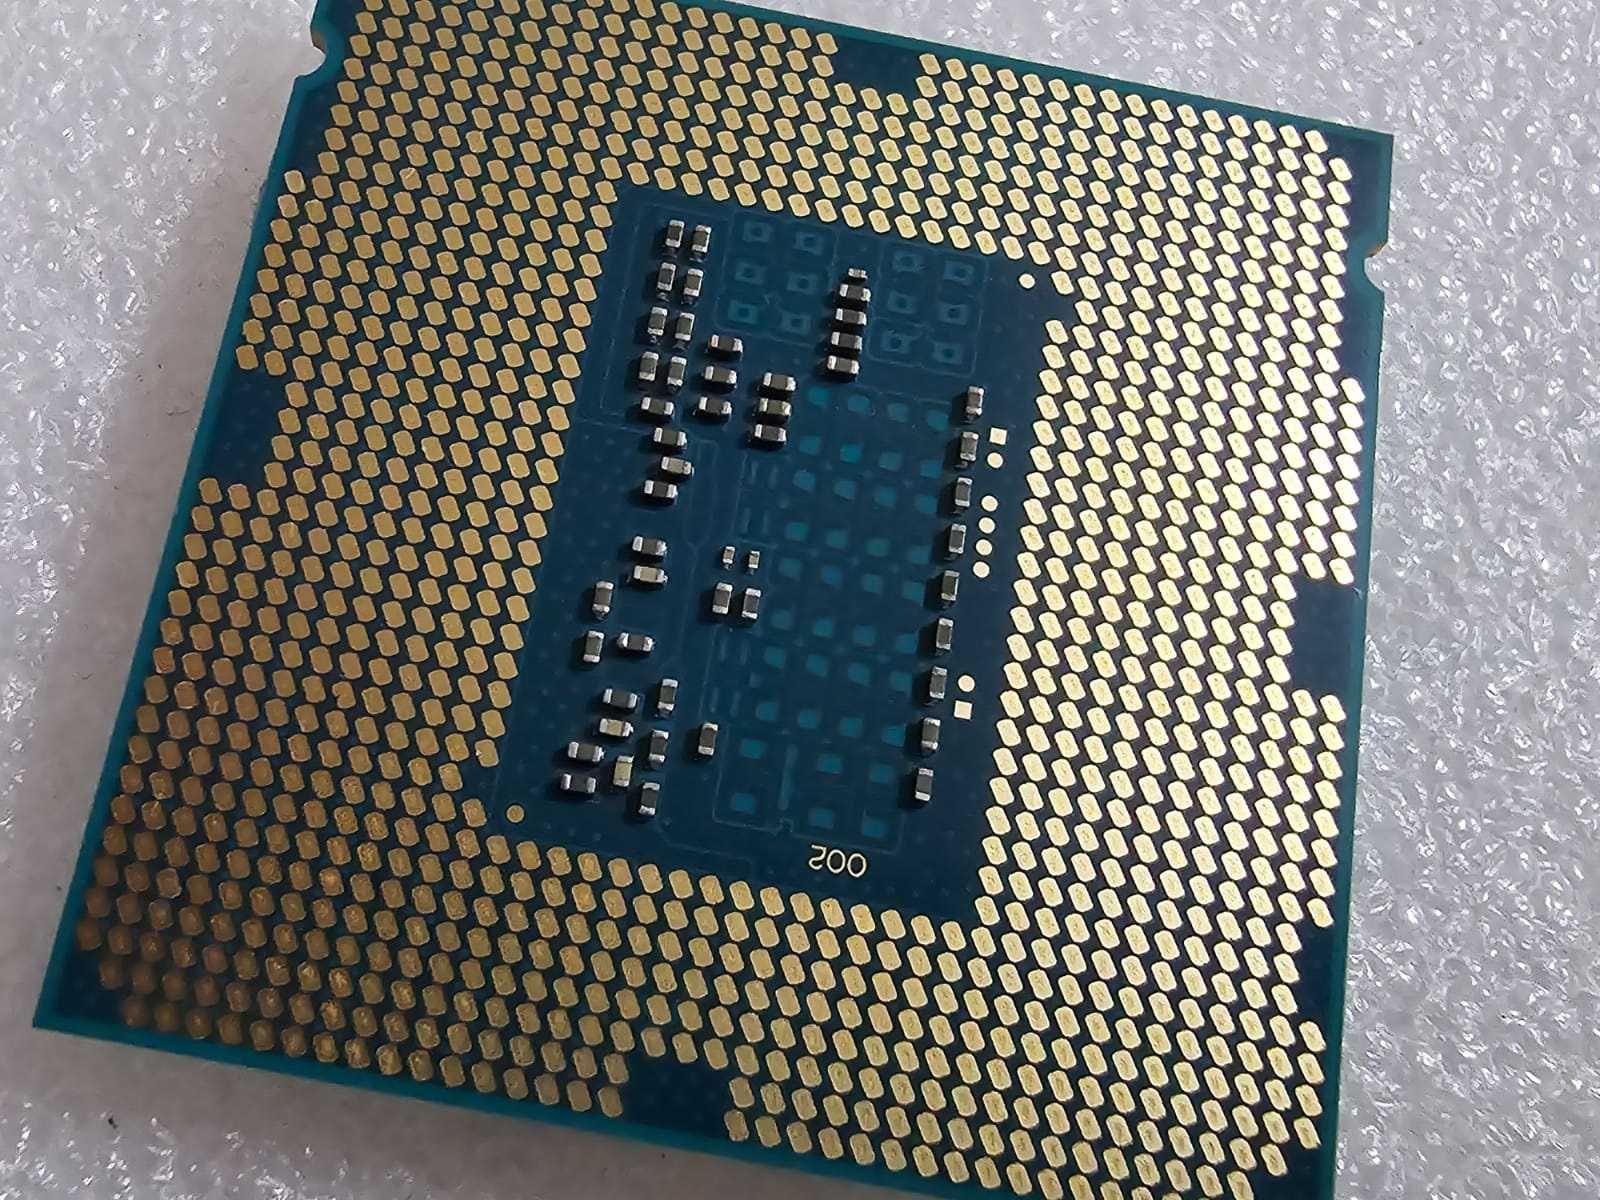 Procesor Intel Quad Core i5-4570S, 2.90GHz, 6Mb LGA 1150 - poze reale